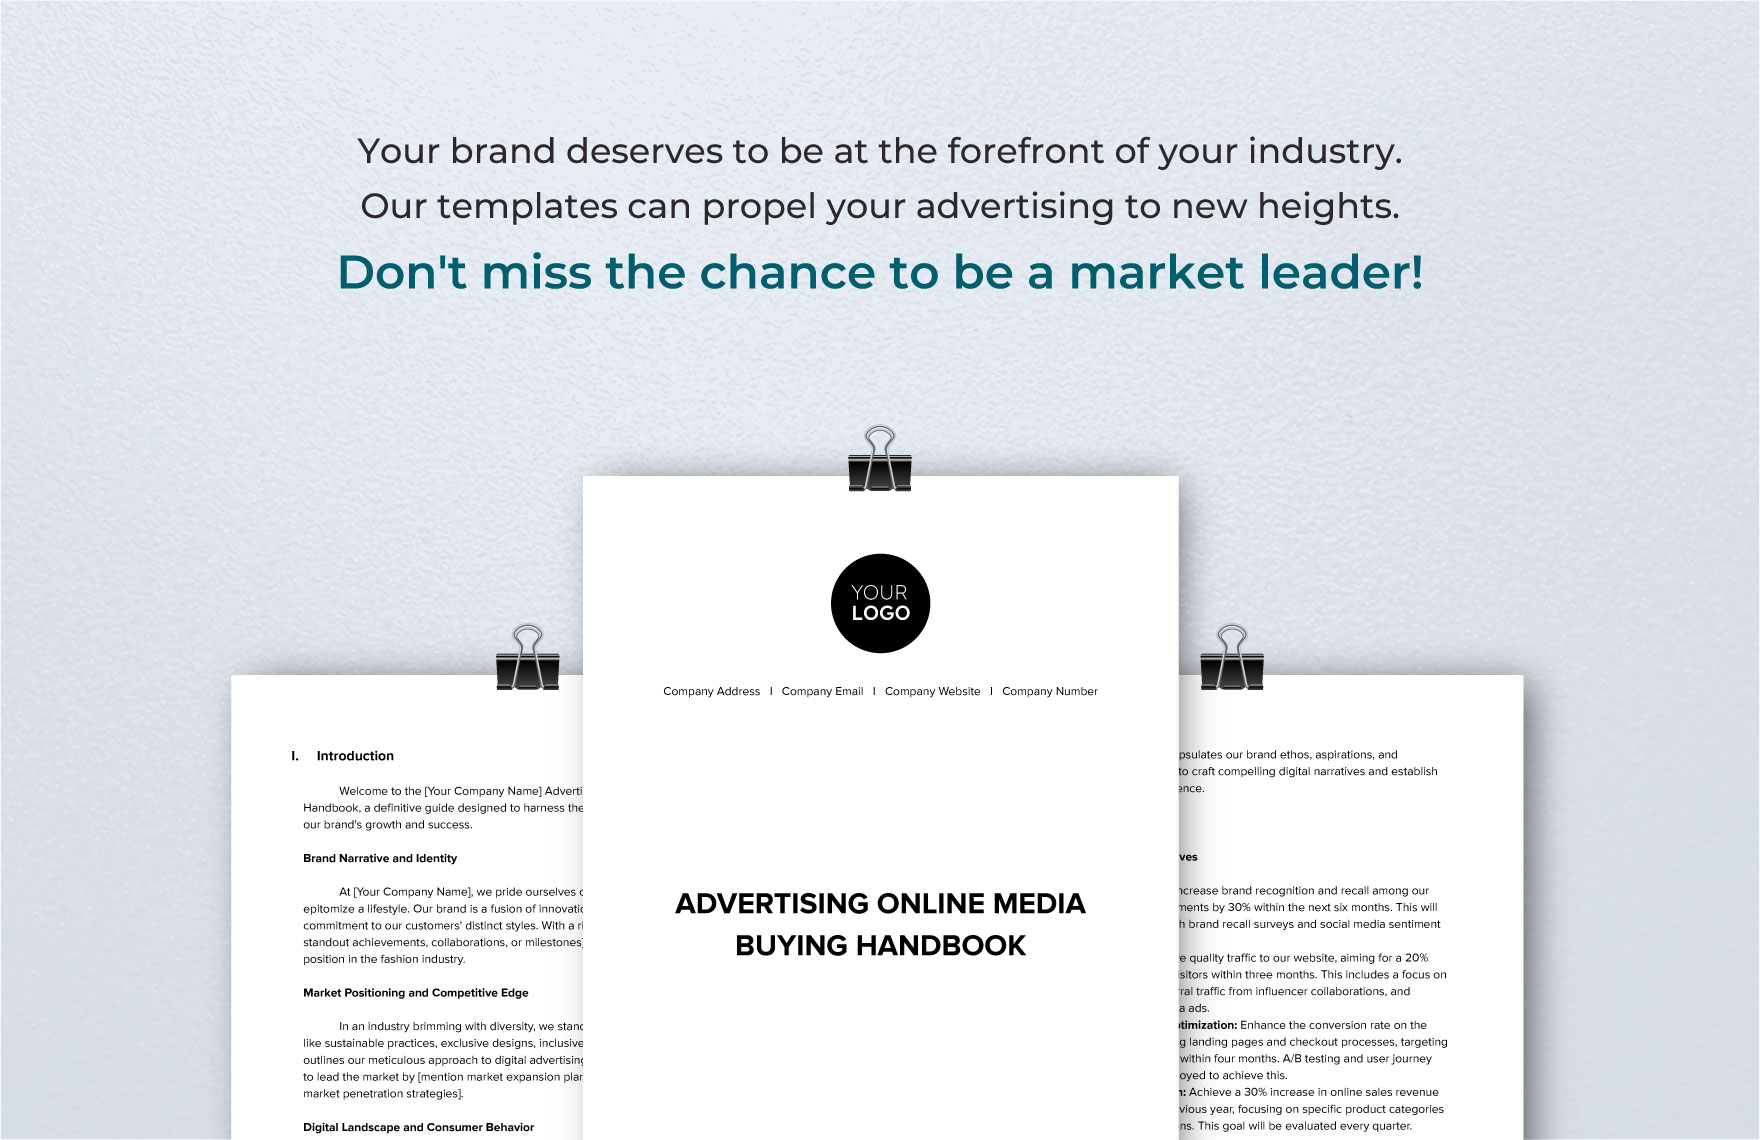 Advertising Online Media Buying Handbook Template